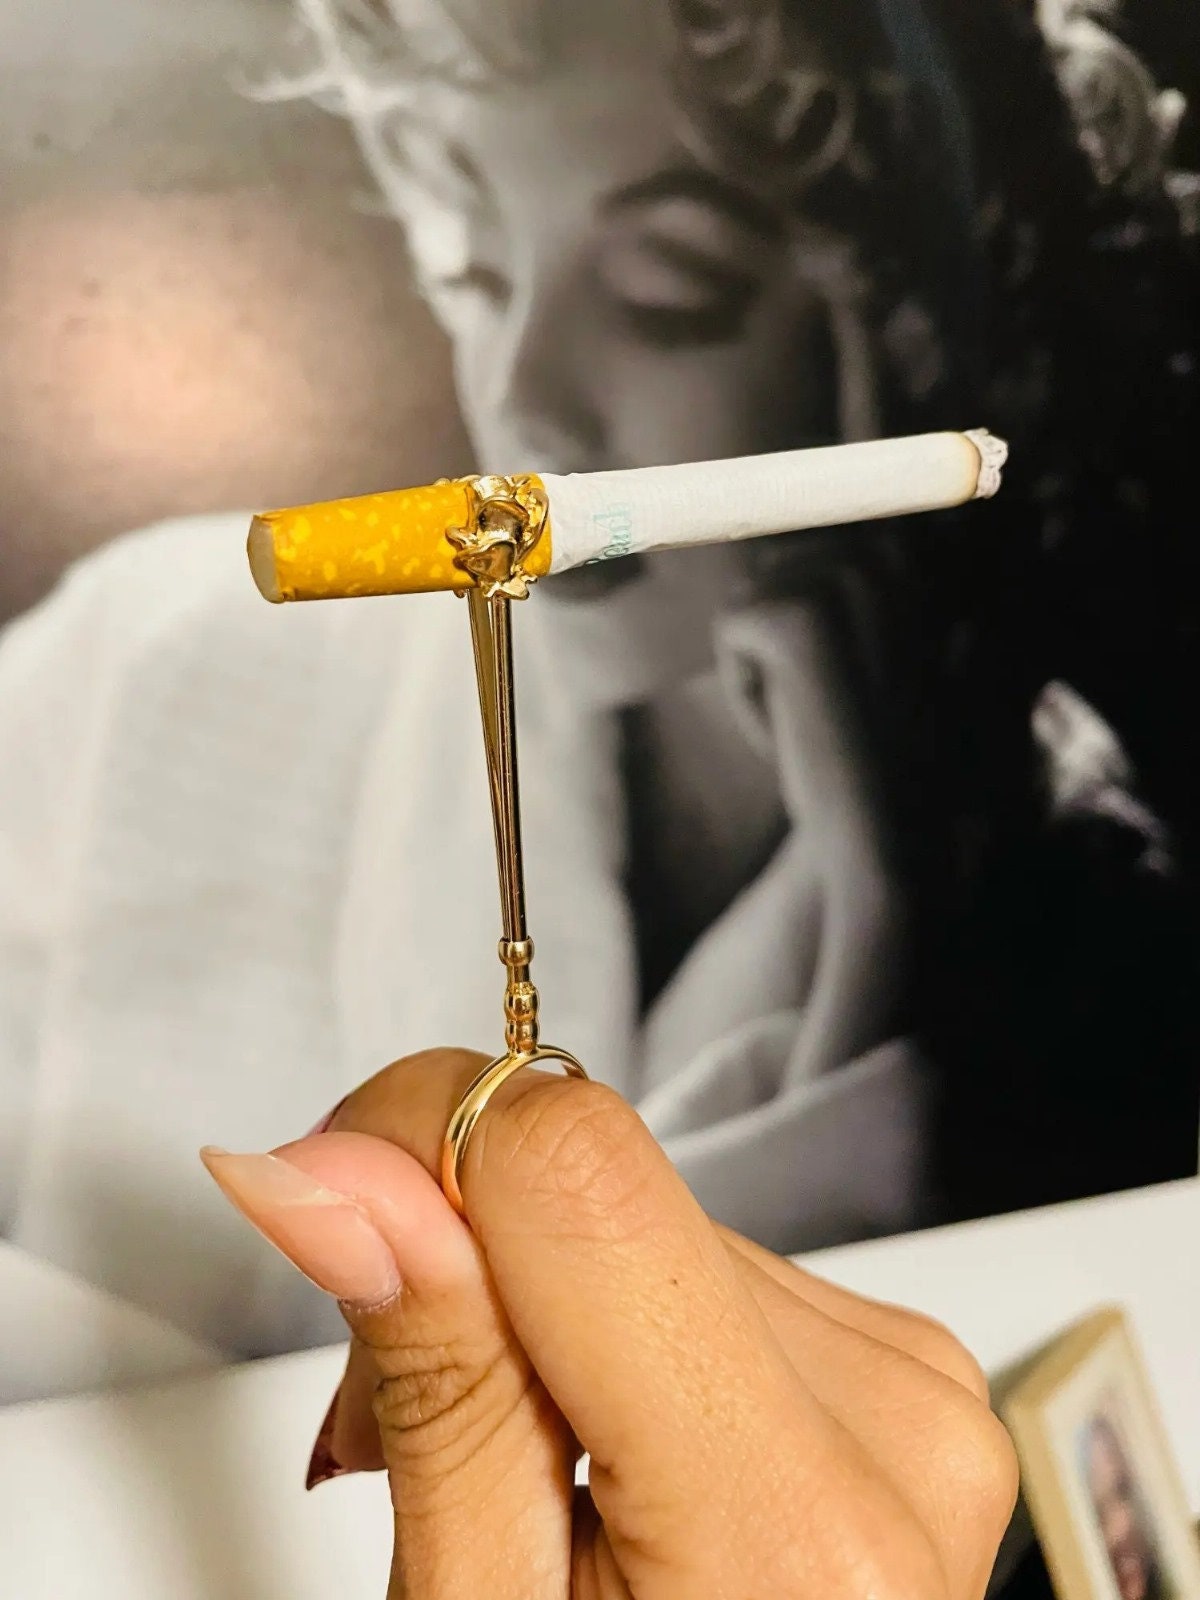 Smoking Smoking Cigarette Holder Male Finger Prevention Smoked